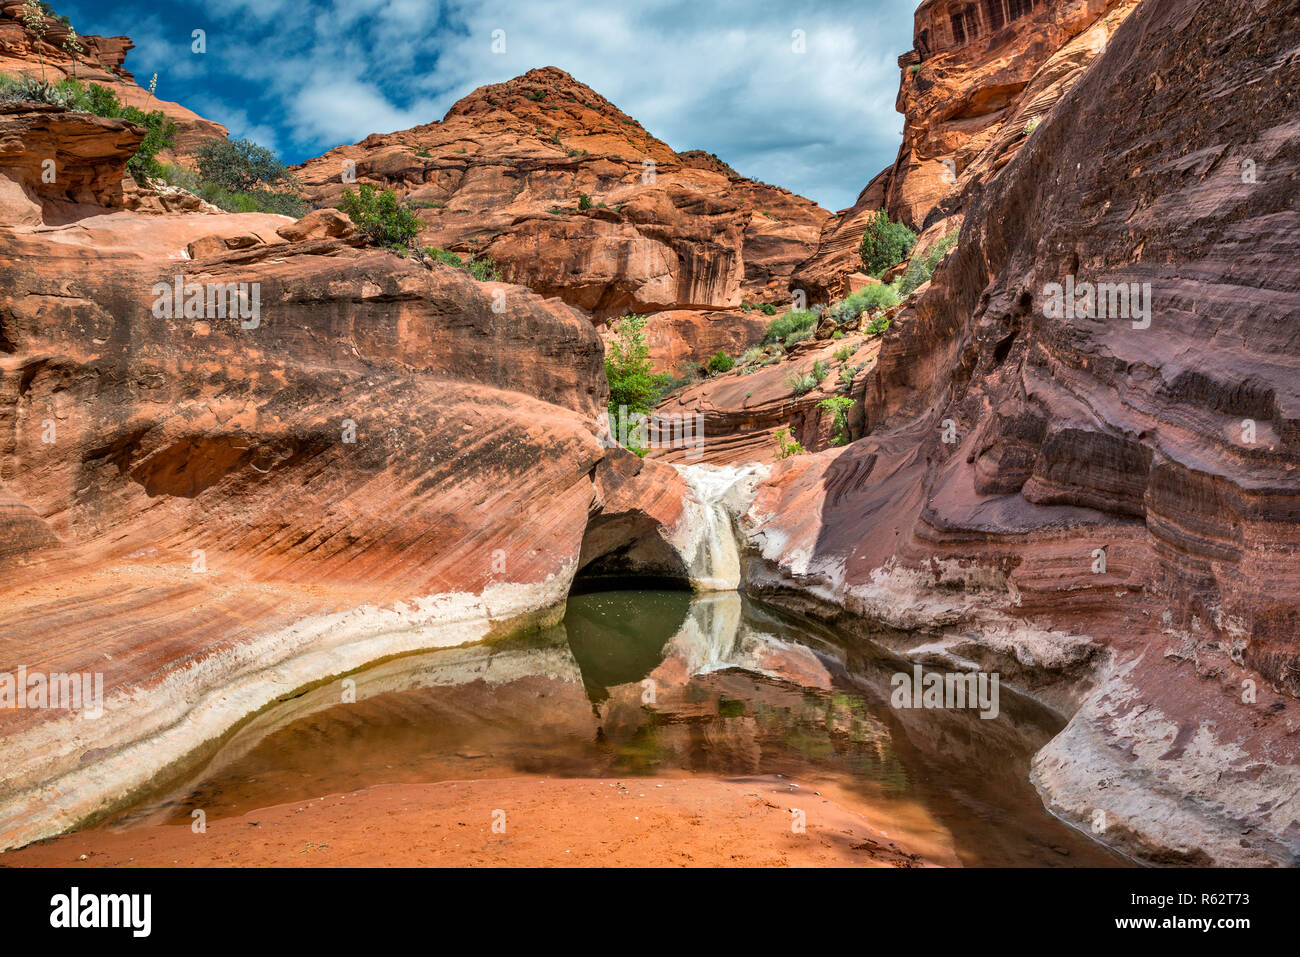 Tinaja, water pool in Navajo sandstone bedrock at Red Cliffs Recreational Area, near St George, Utah, USA Stock Photo